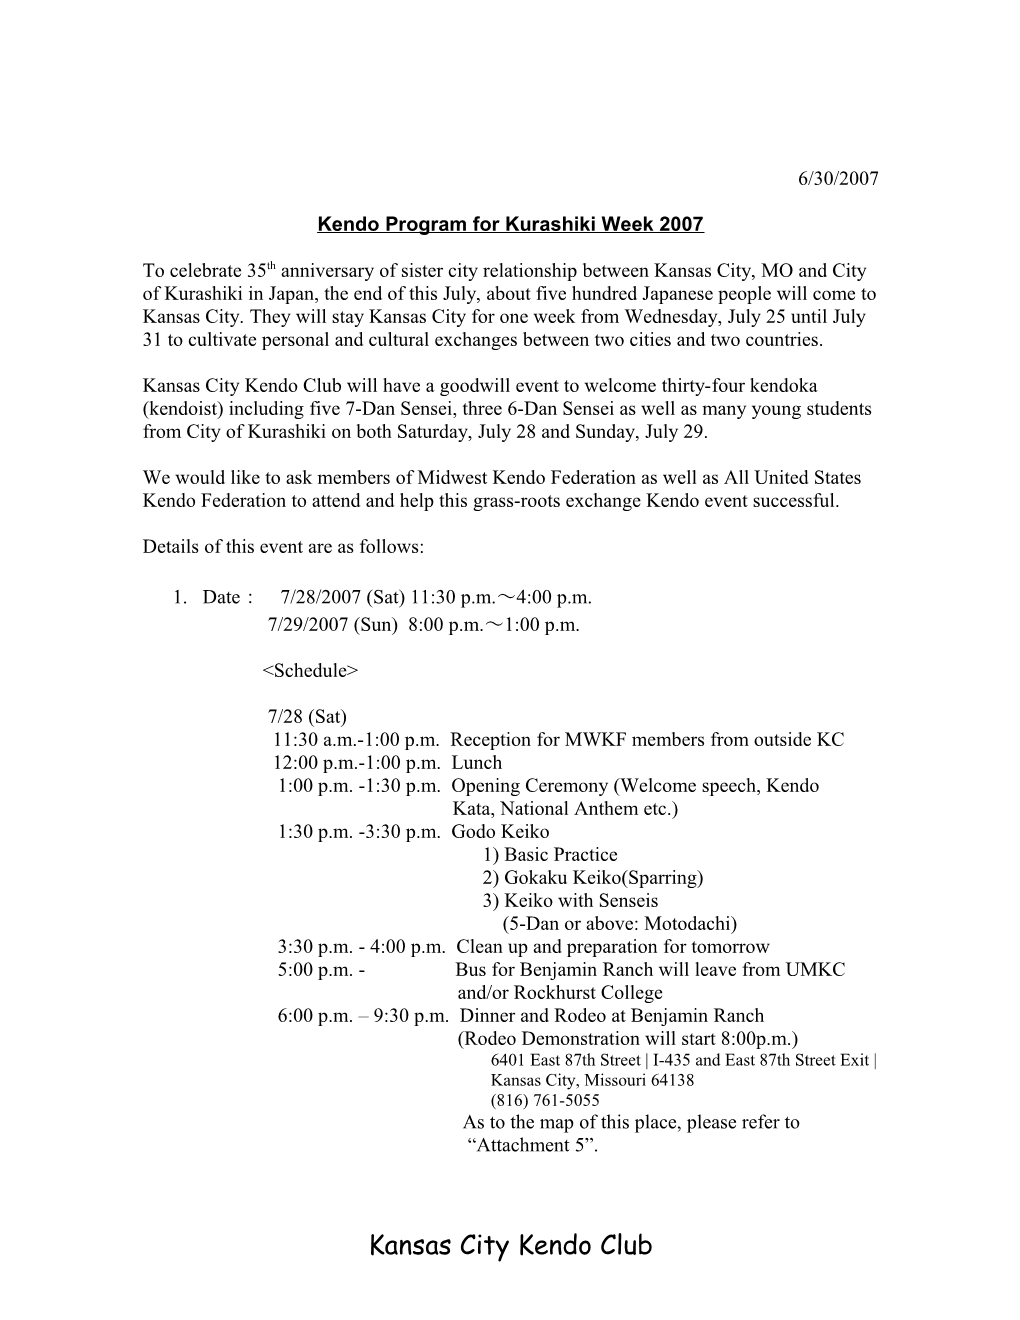 Kendo Program for Kurashiki Week 2007